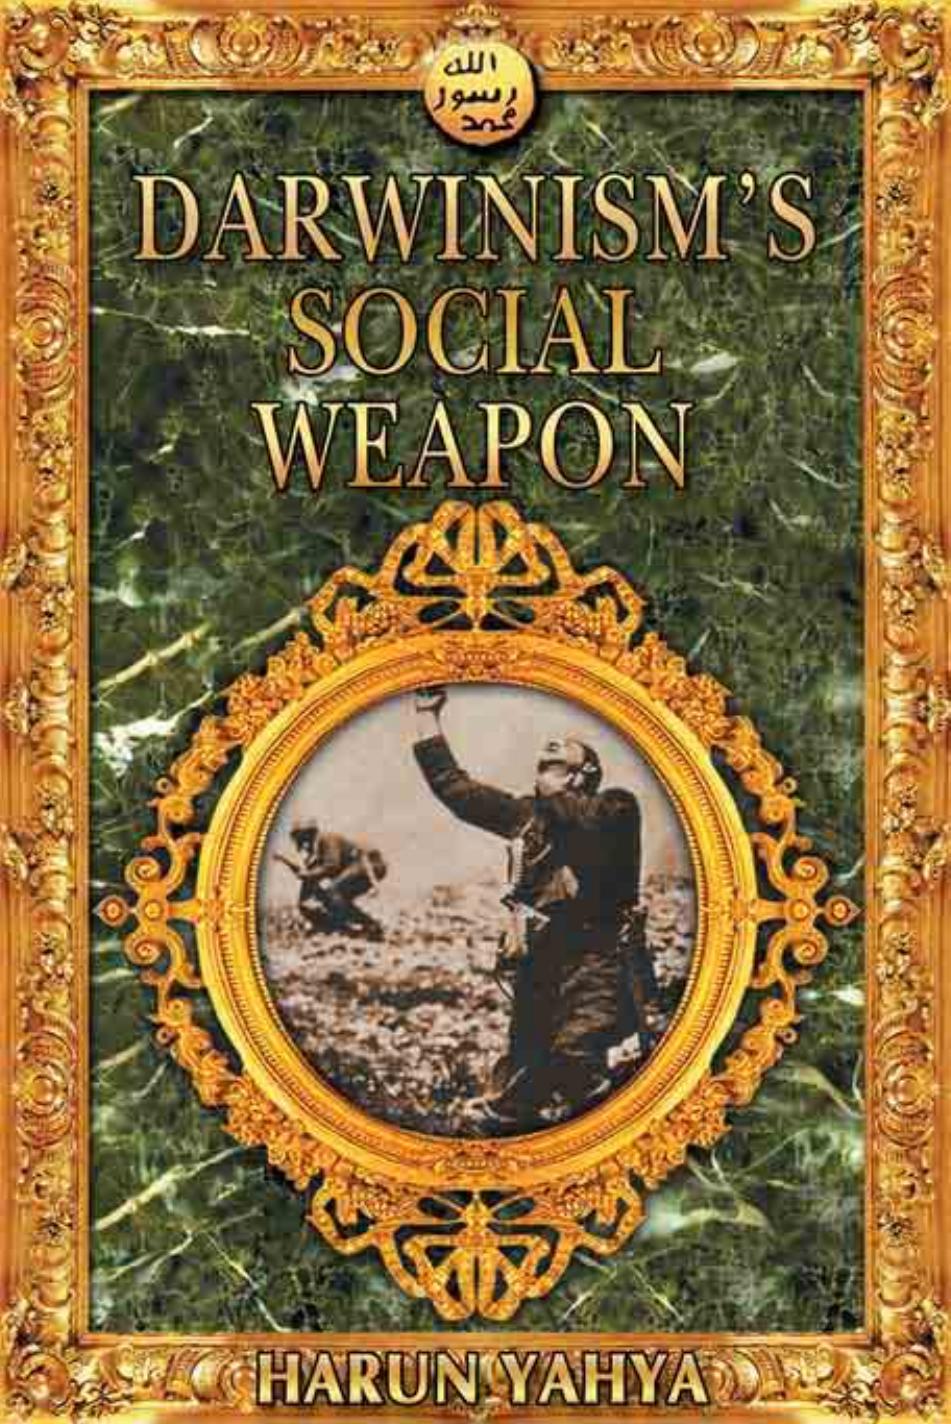 Darwinism's Social Weapon by Harun Yahya